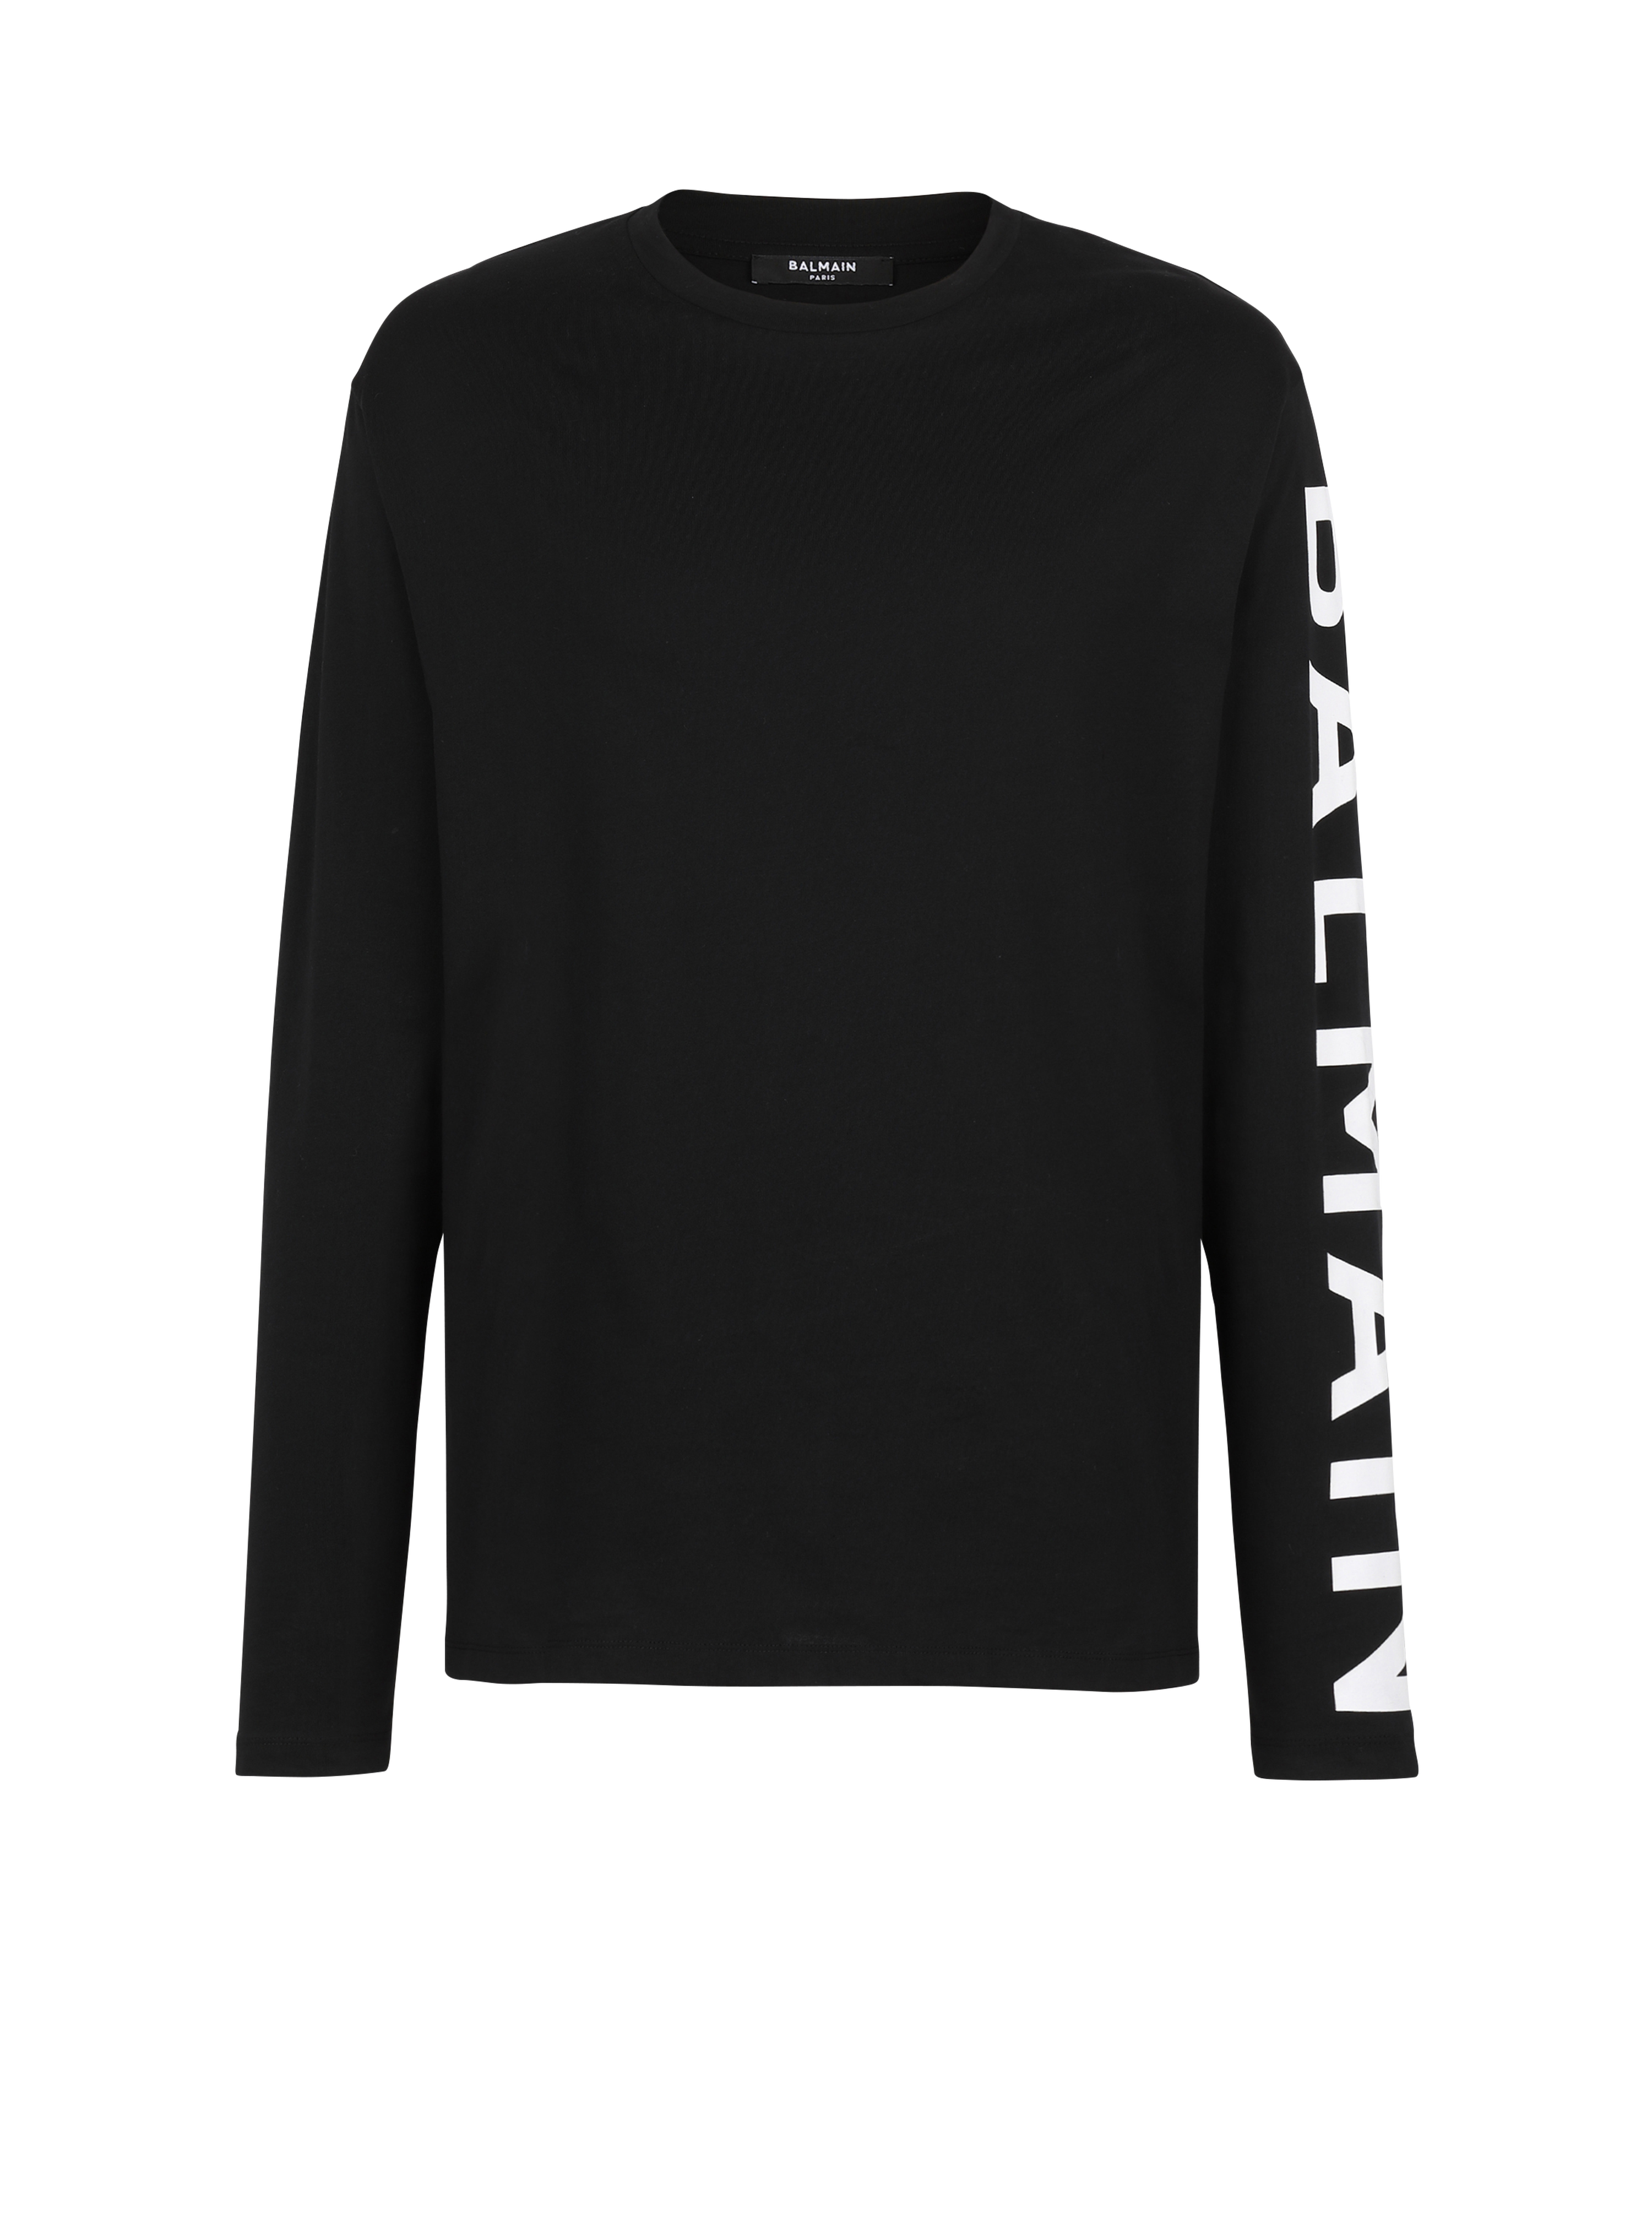 Long-sleeved cotton T-shirt with Balmain signature on sleeve, black